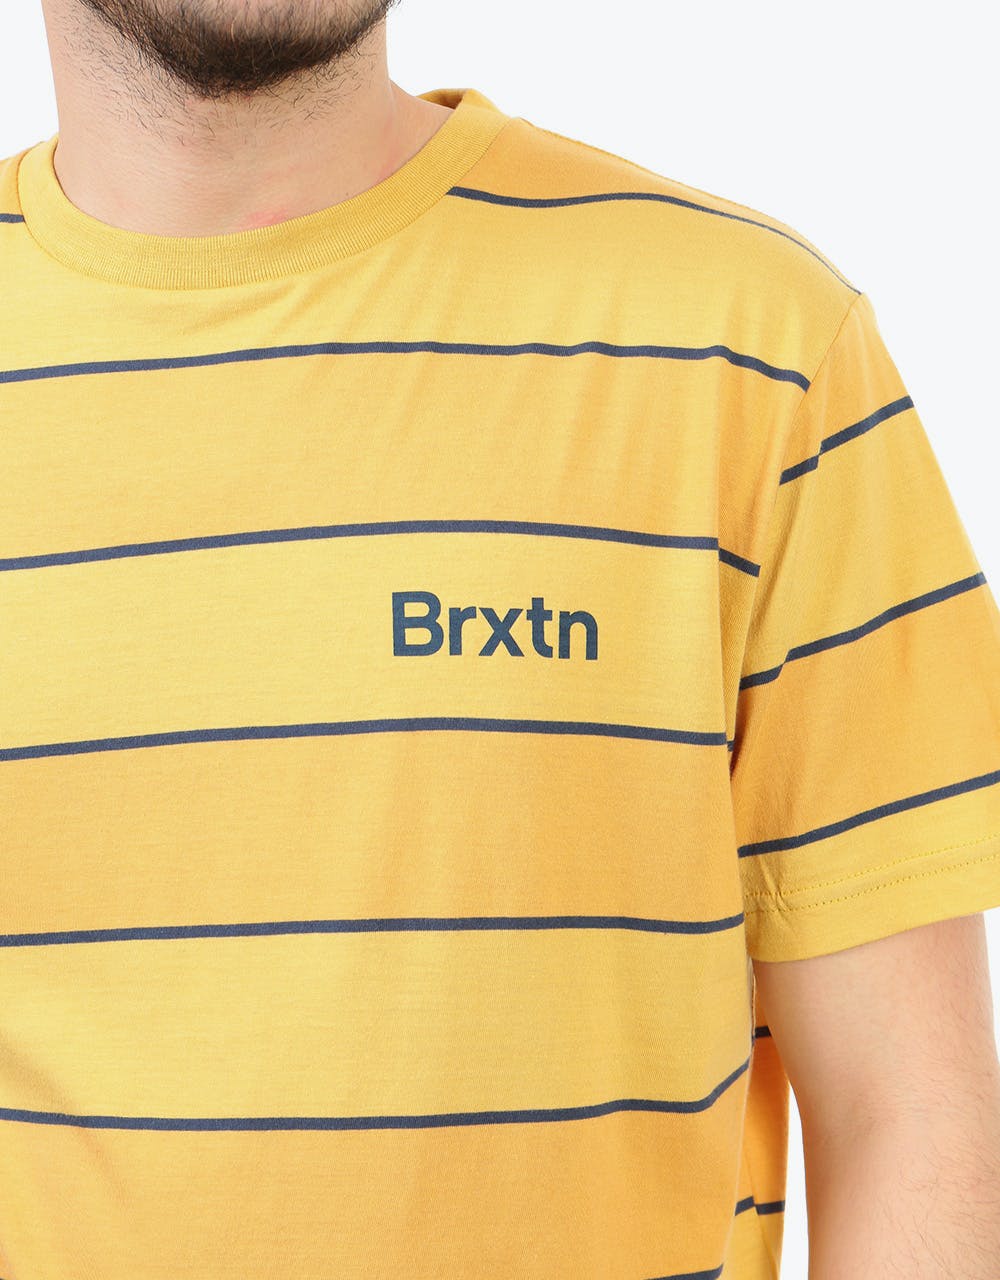 Brixton Hilt Print S/S Knit - Sunset Yellow/Washed Navy